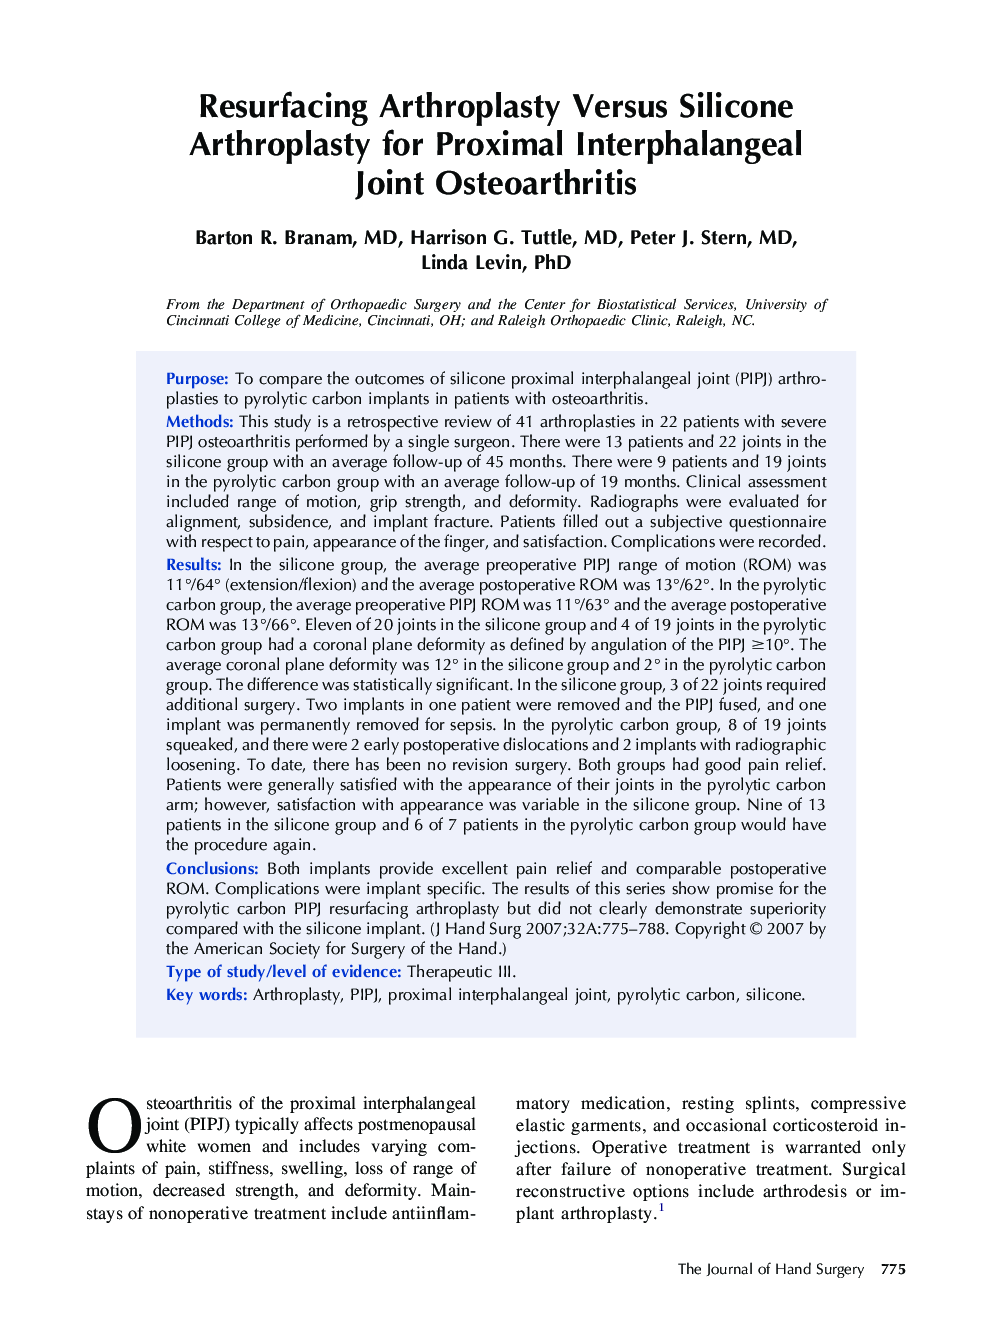 Resurfacing Arthroplasty Versus Silicone Arthroplasty for Proximal Interphalangeal Joint Osteoarthritis 